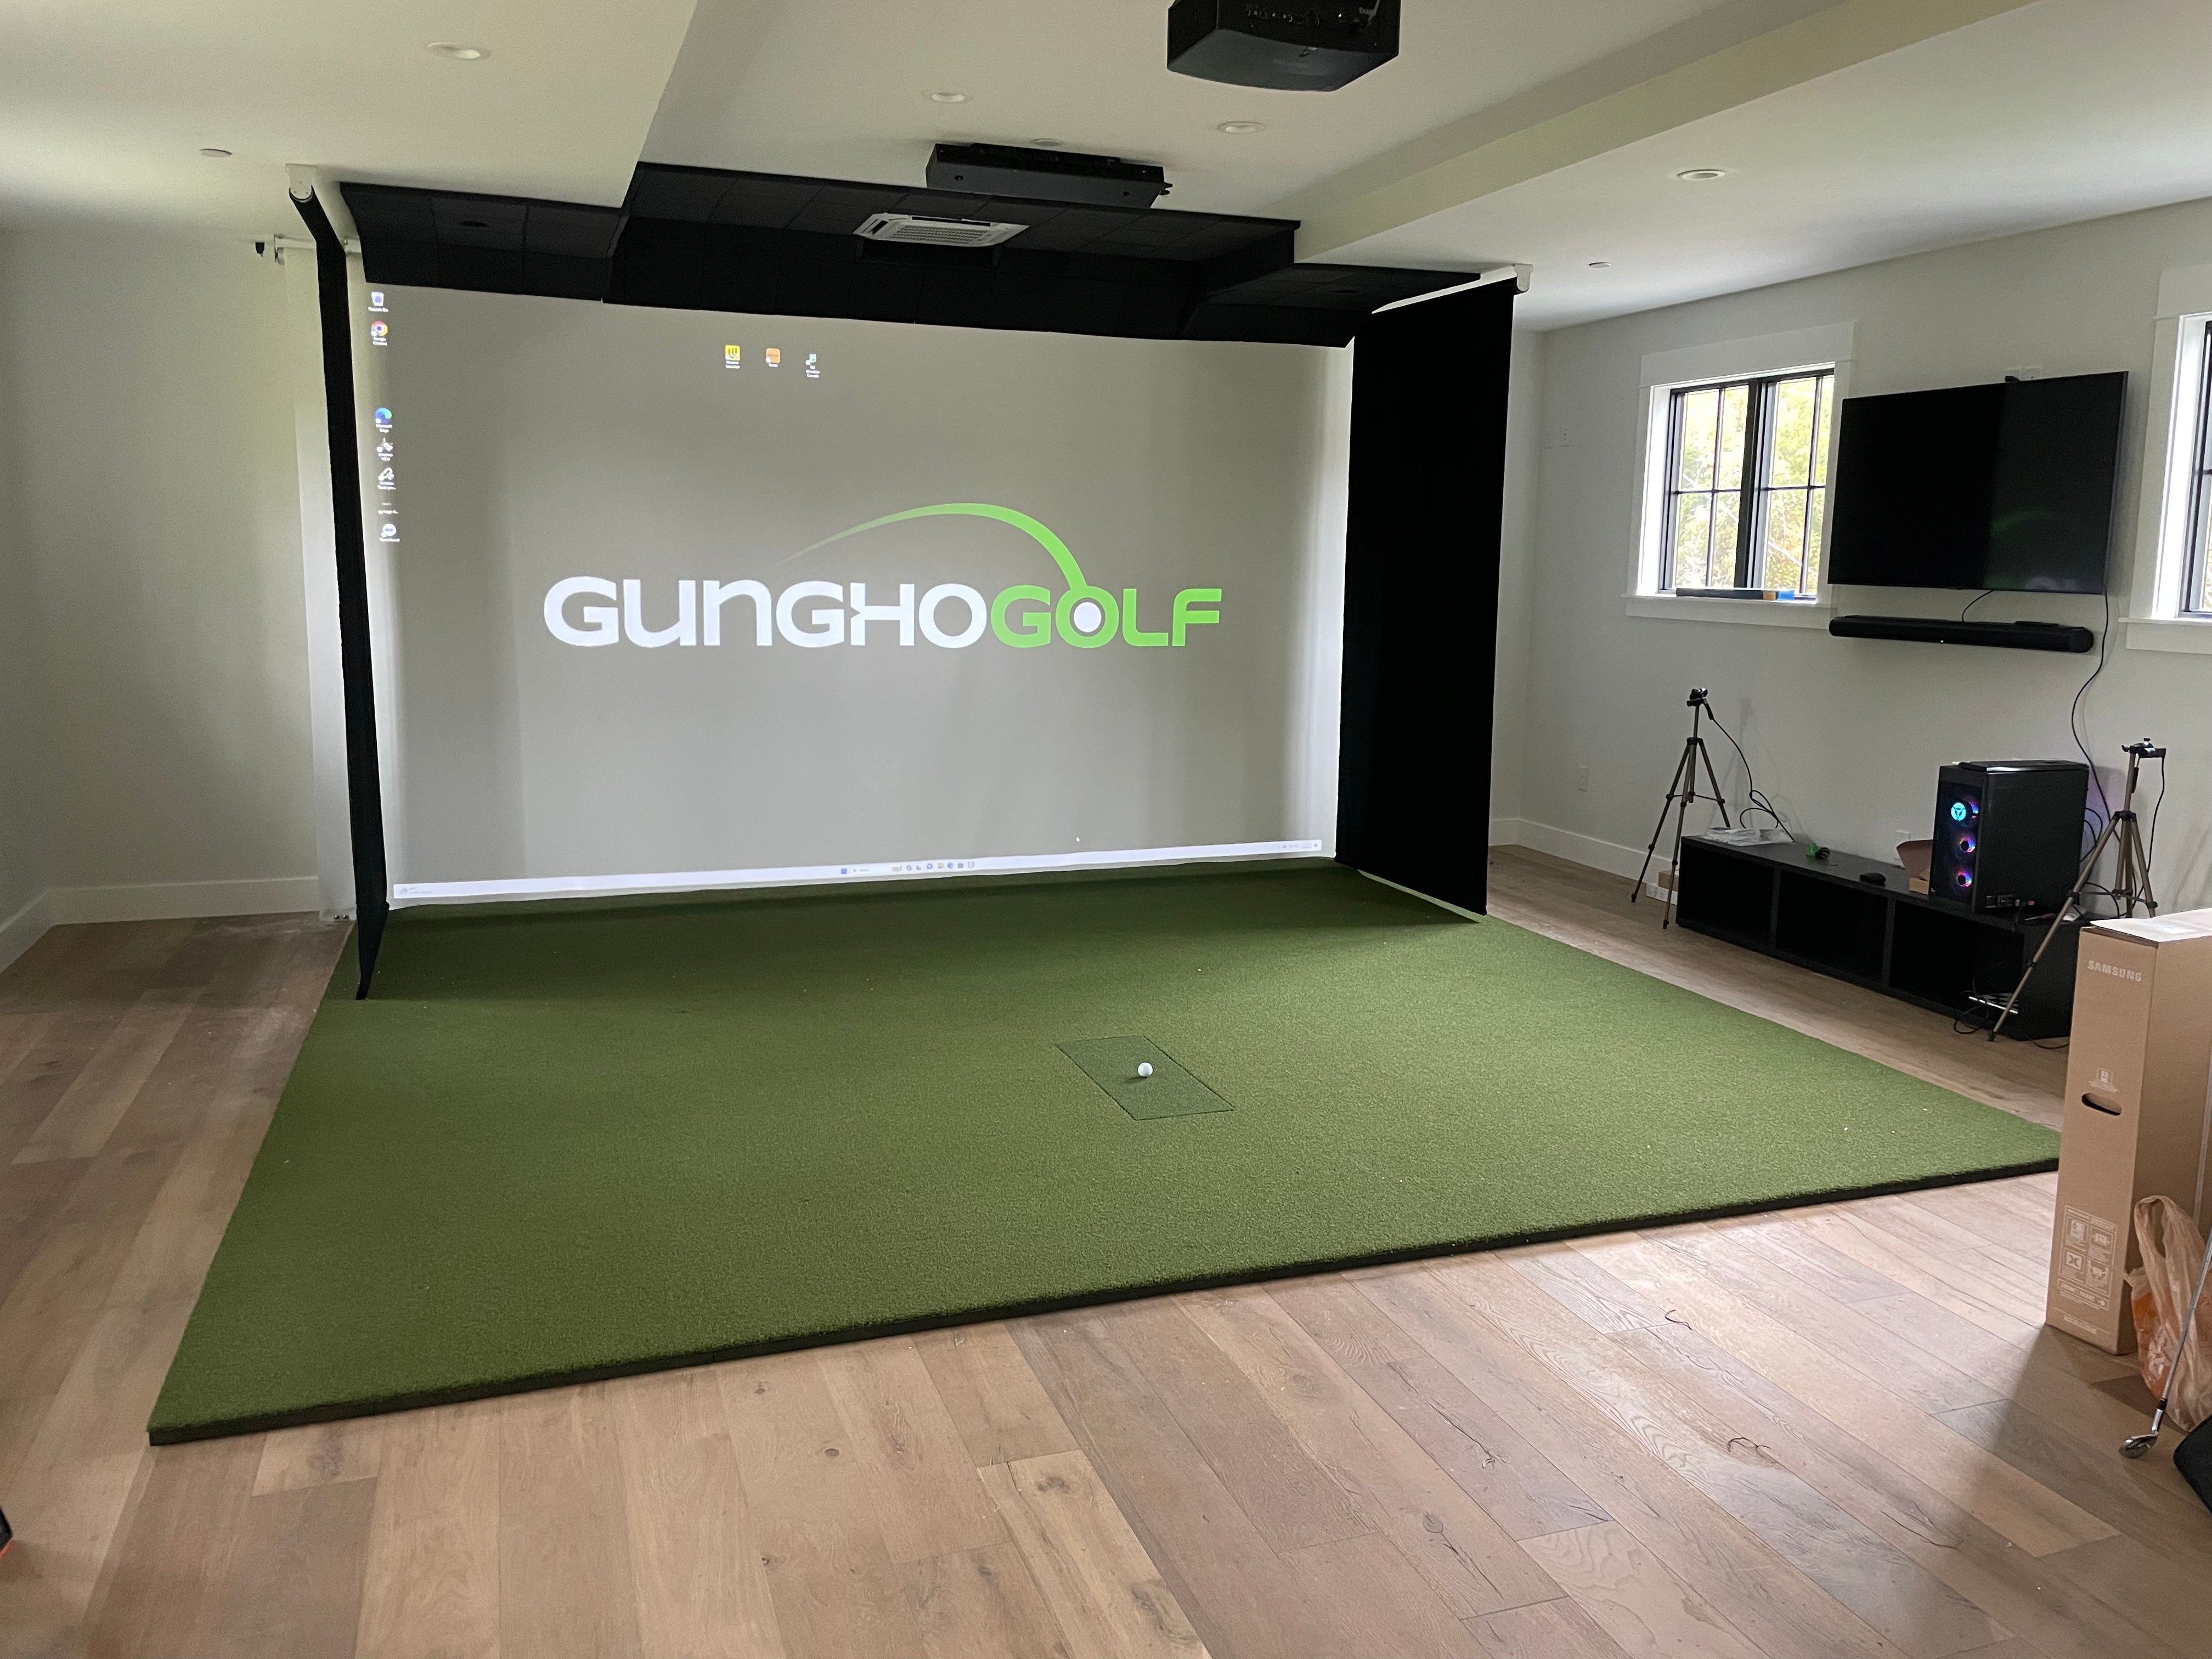 Retractable Golf Simulator Kit